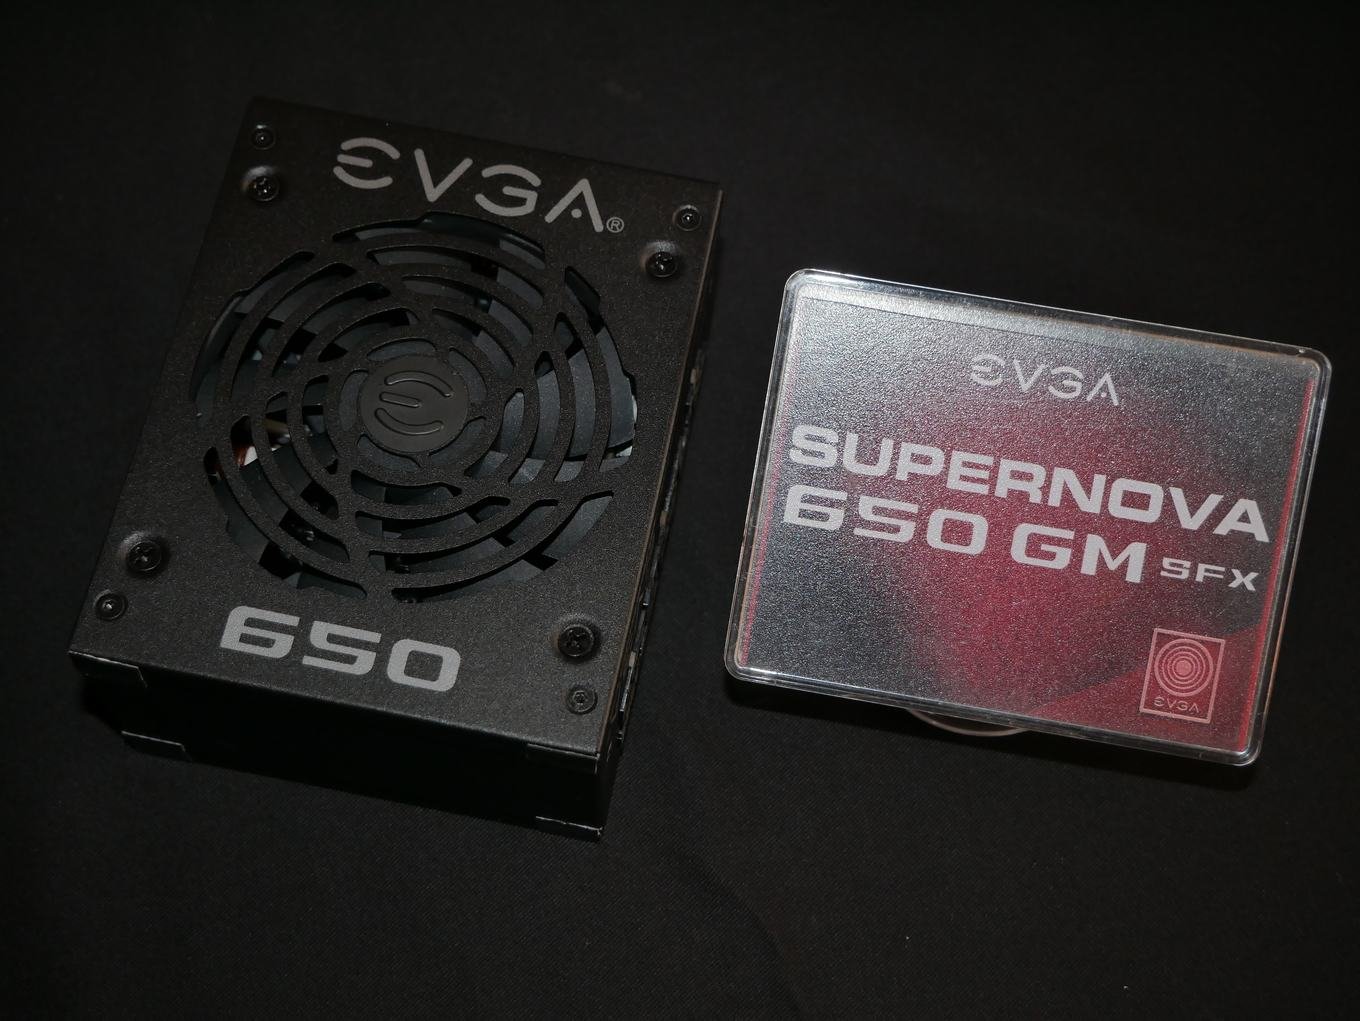 EVGA SuperNova 650W GM SFX